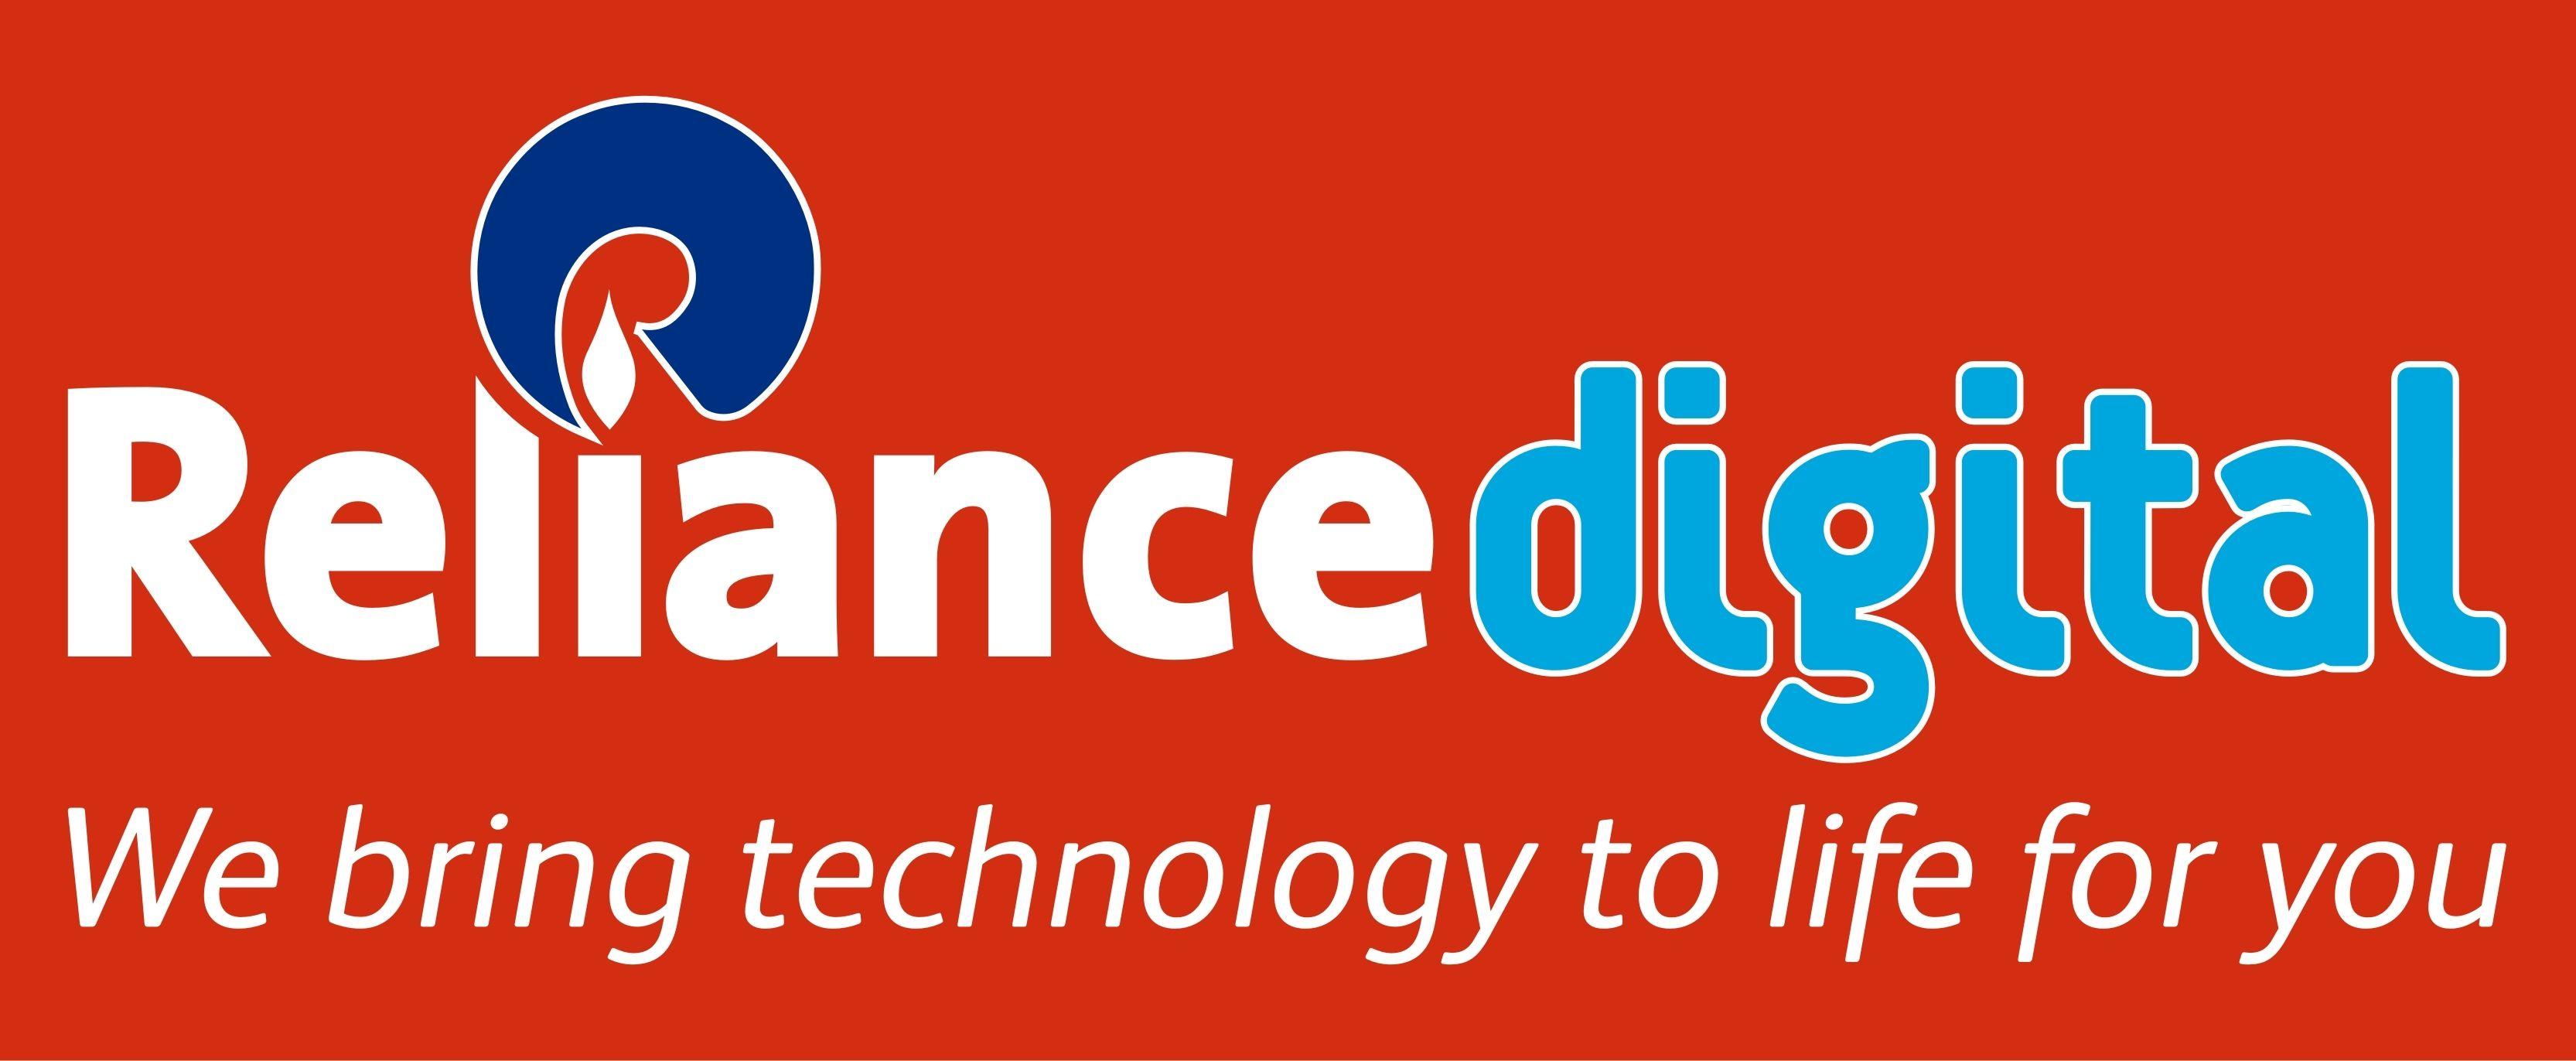 Reliance Logo - Reliance Logos